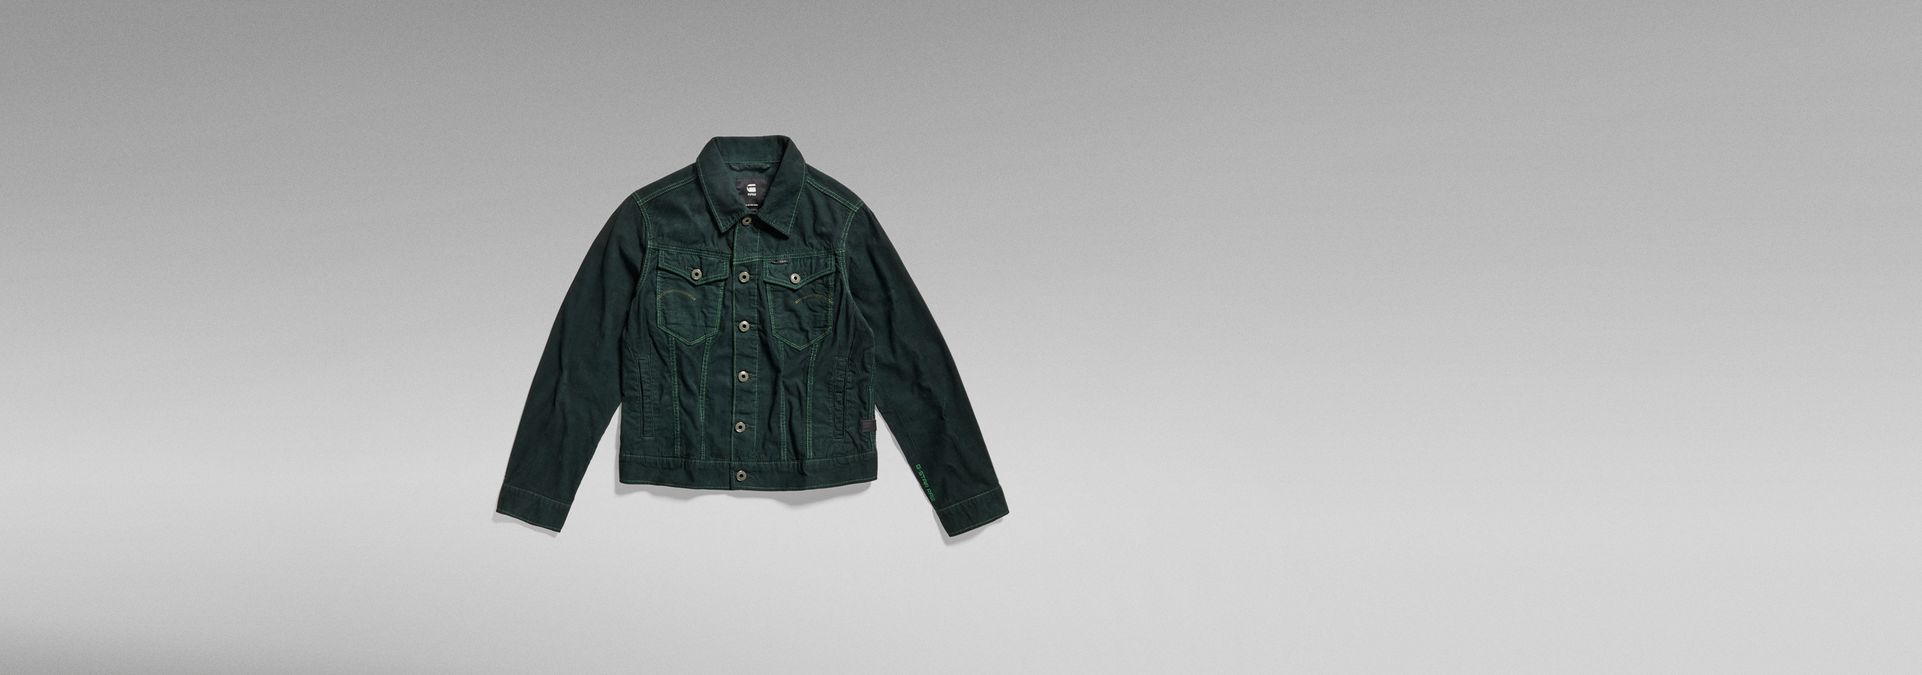 Arc 3D Jacket | Green | G-Star RAW®